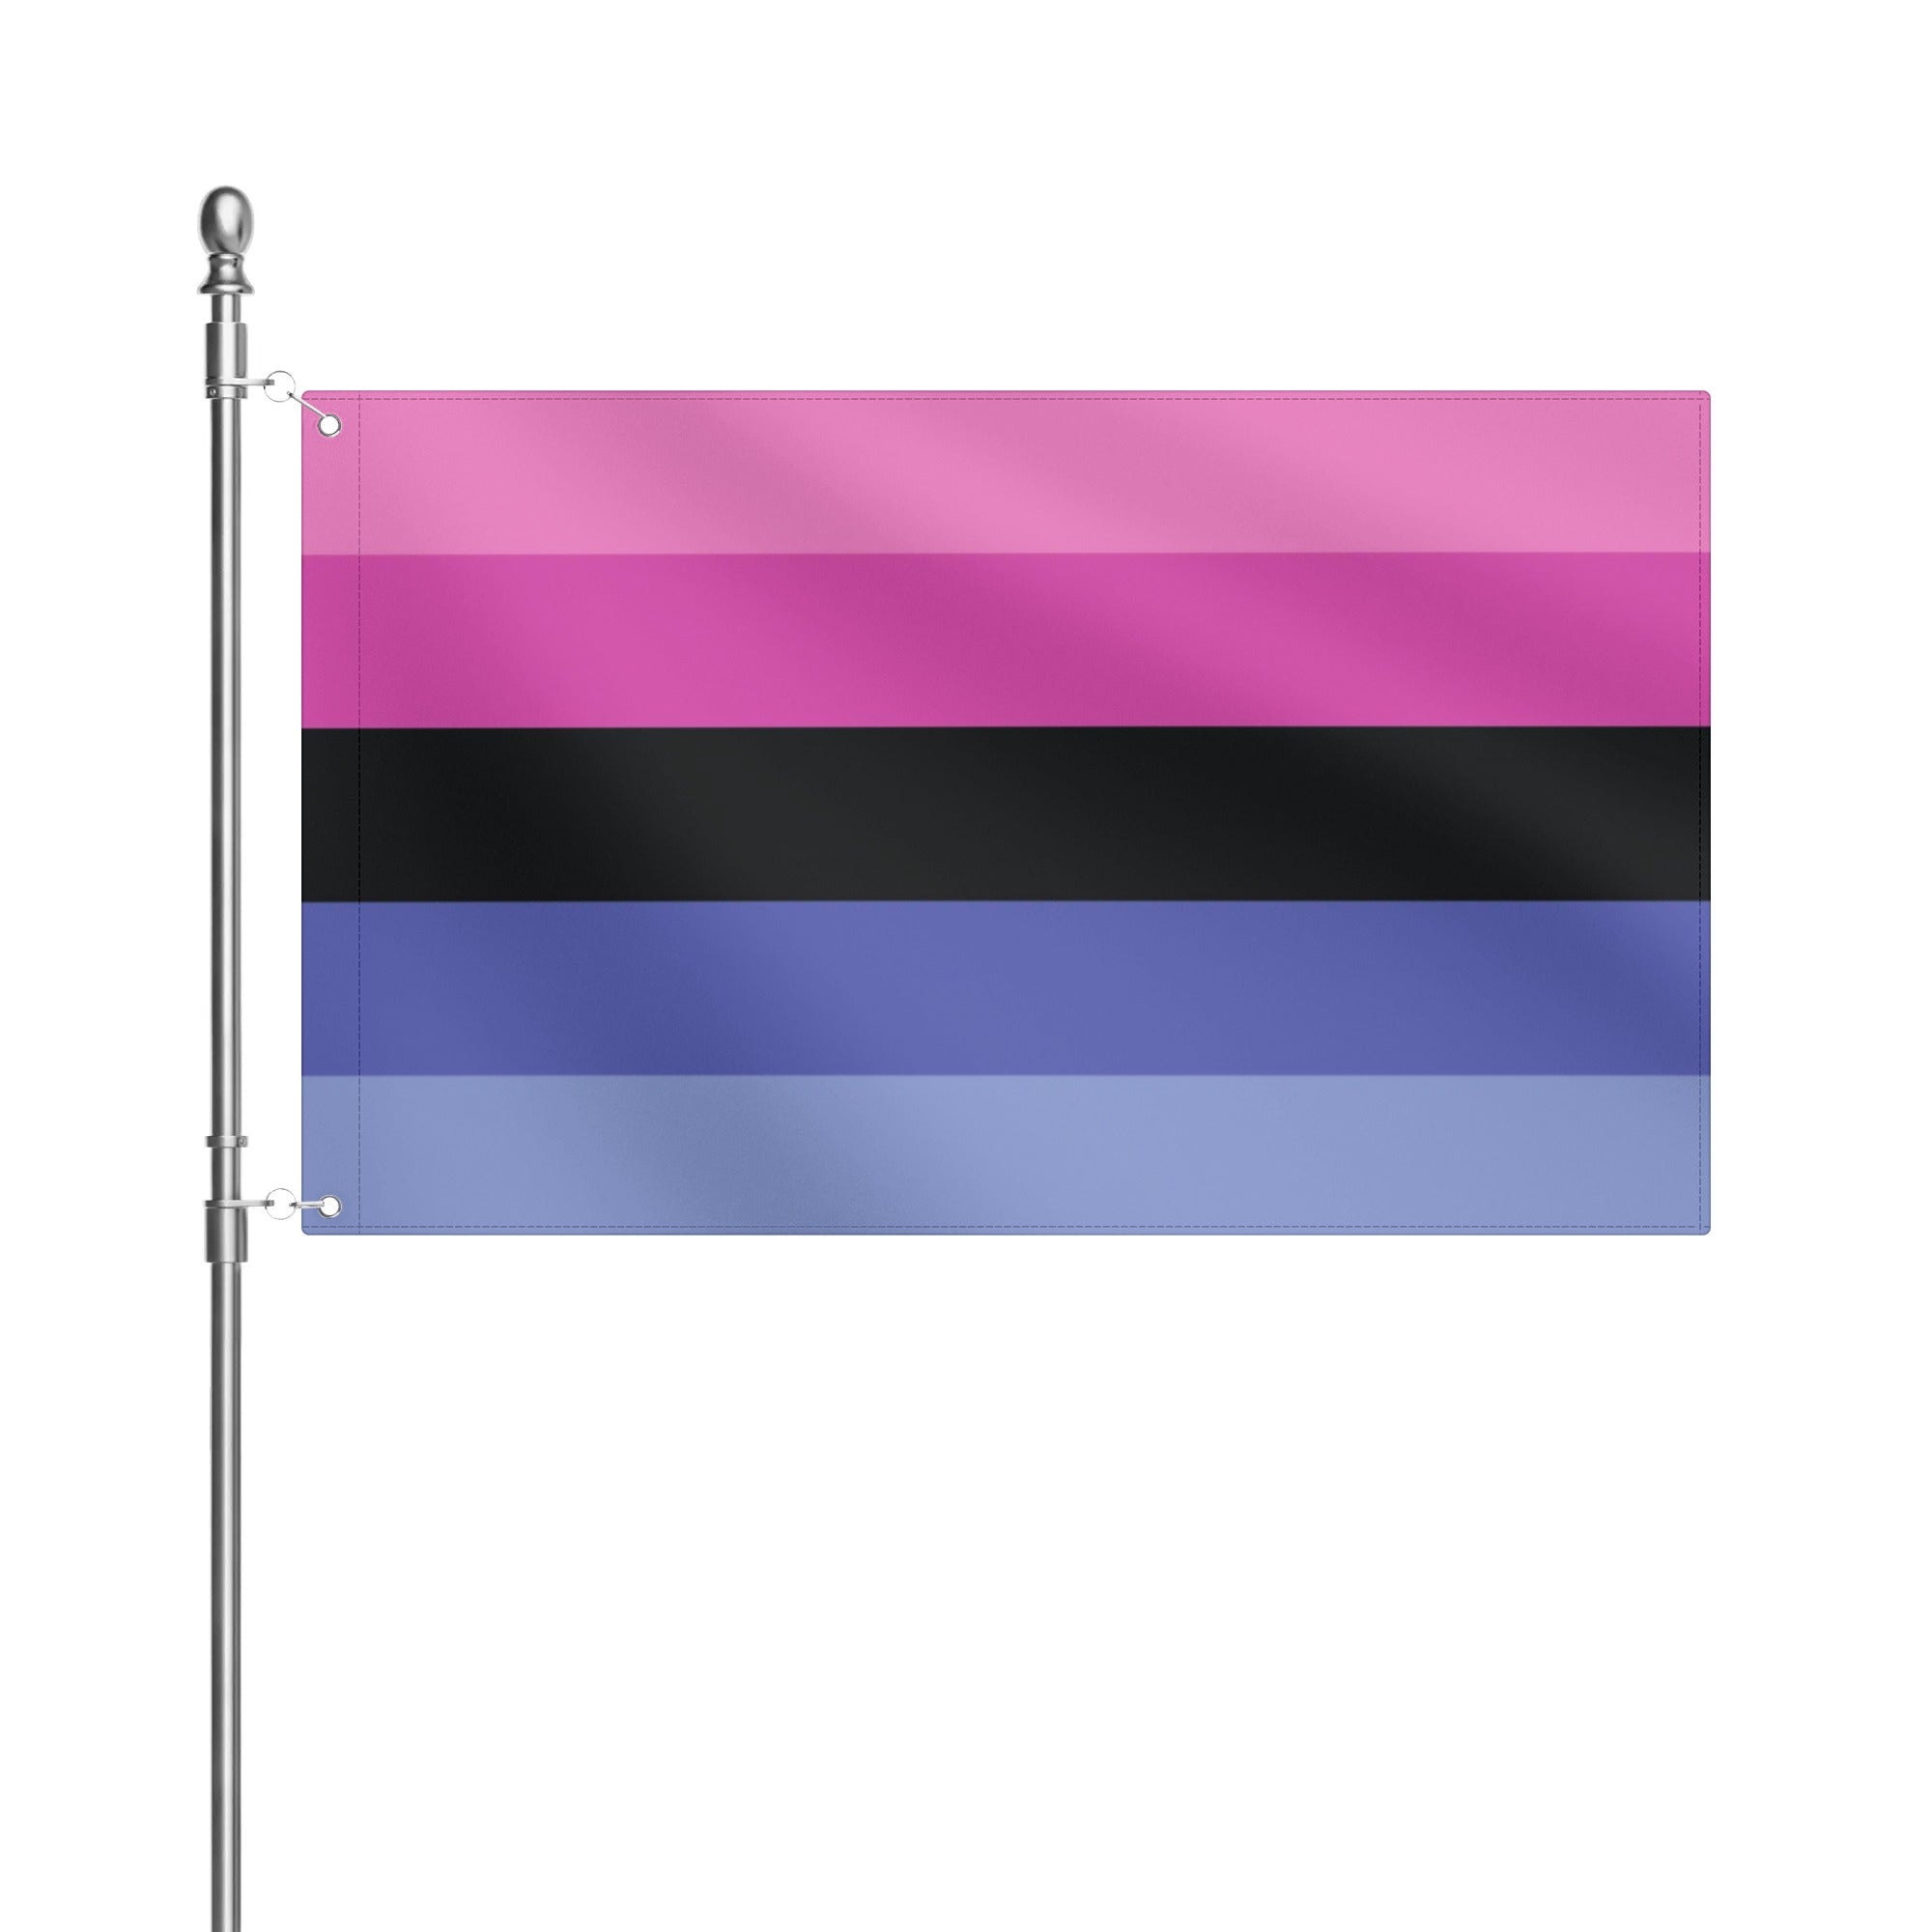 LGBT_Pride-Omnisexual Pride Flag 3x5 Ft - Rose Gold Co. Shop